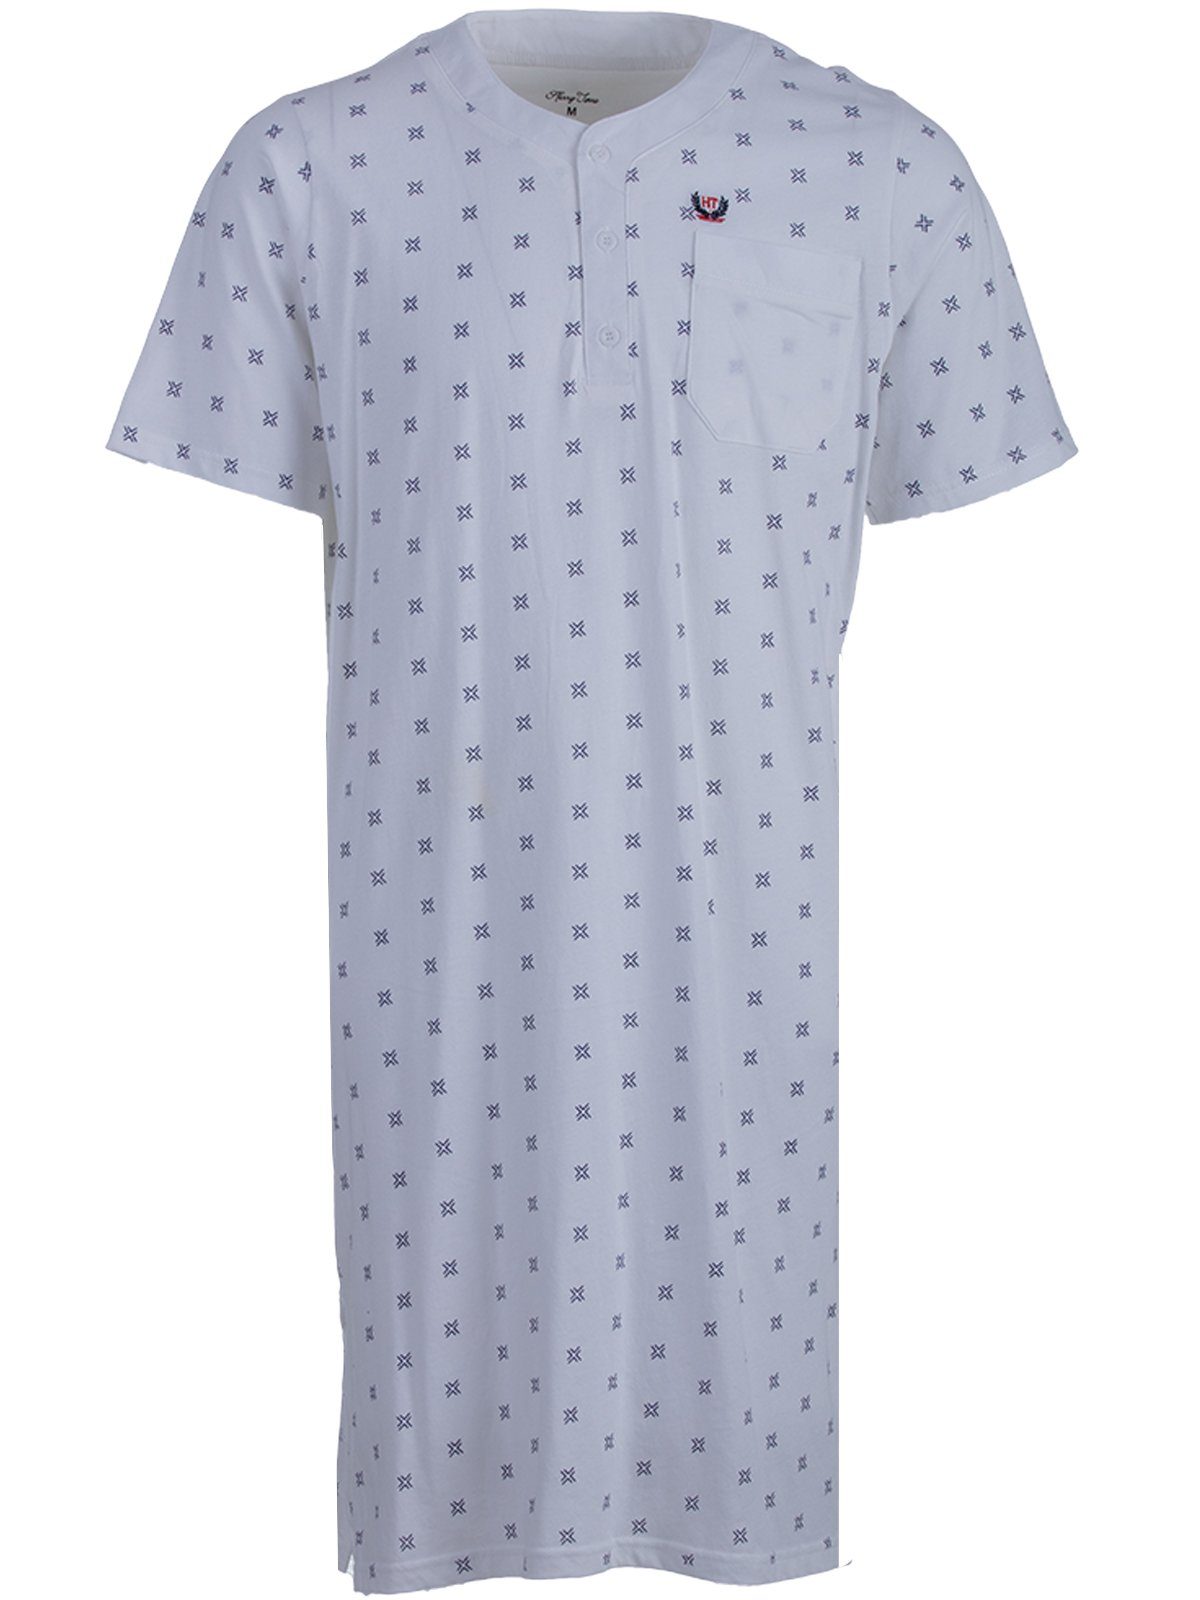 Henry Terre Nachthemd Nachthemd Kurzarm - Kreuz off-white